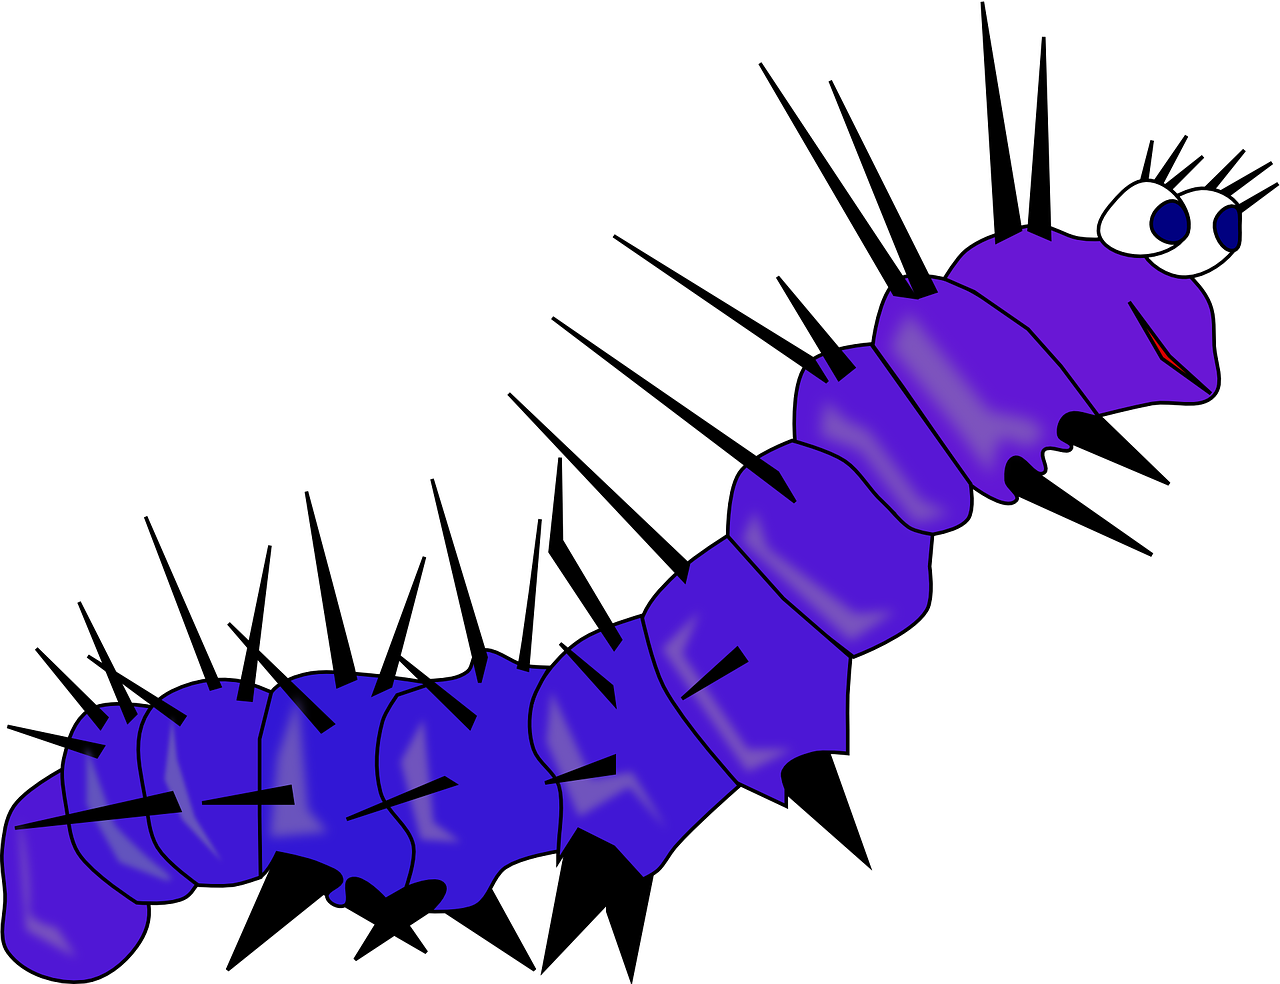 Vector Caterpillar PNG imagen Transparente